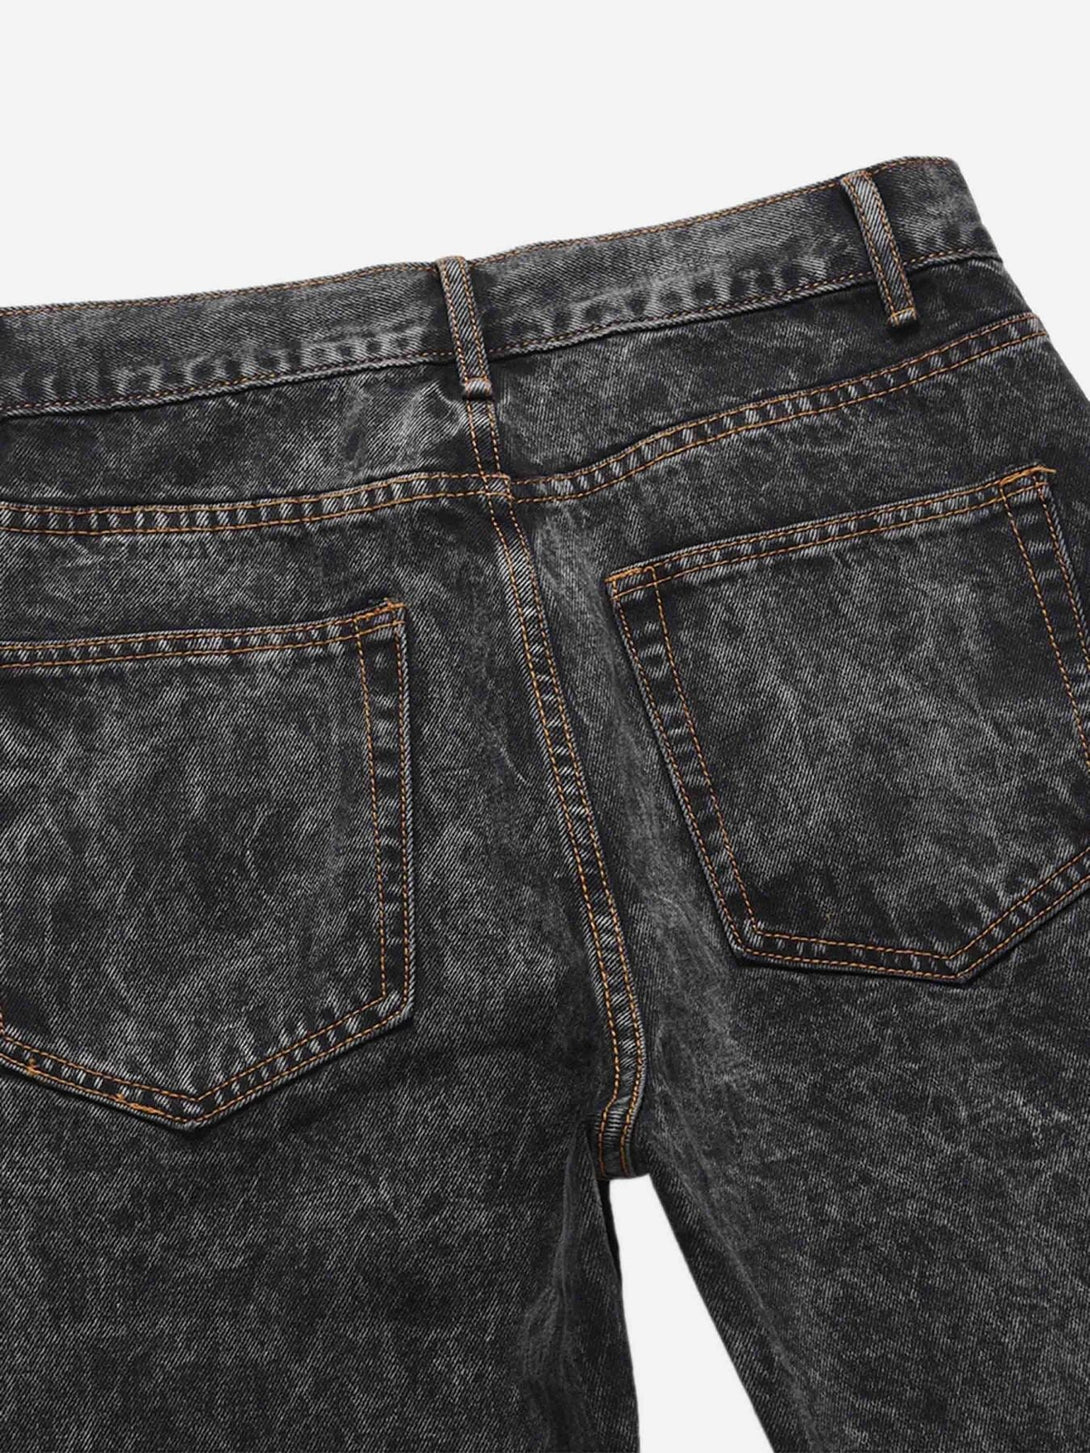 Majesda® - Acid wash Embroidery Stitching Two-tone Jeans - 1744- Outfit Ideas - Streetwear Fashion - majesda.com